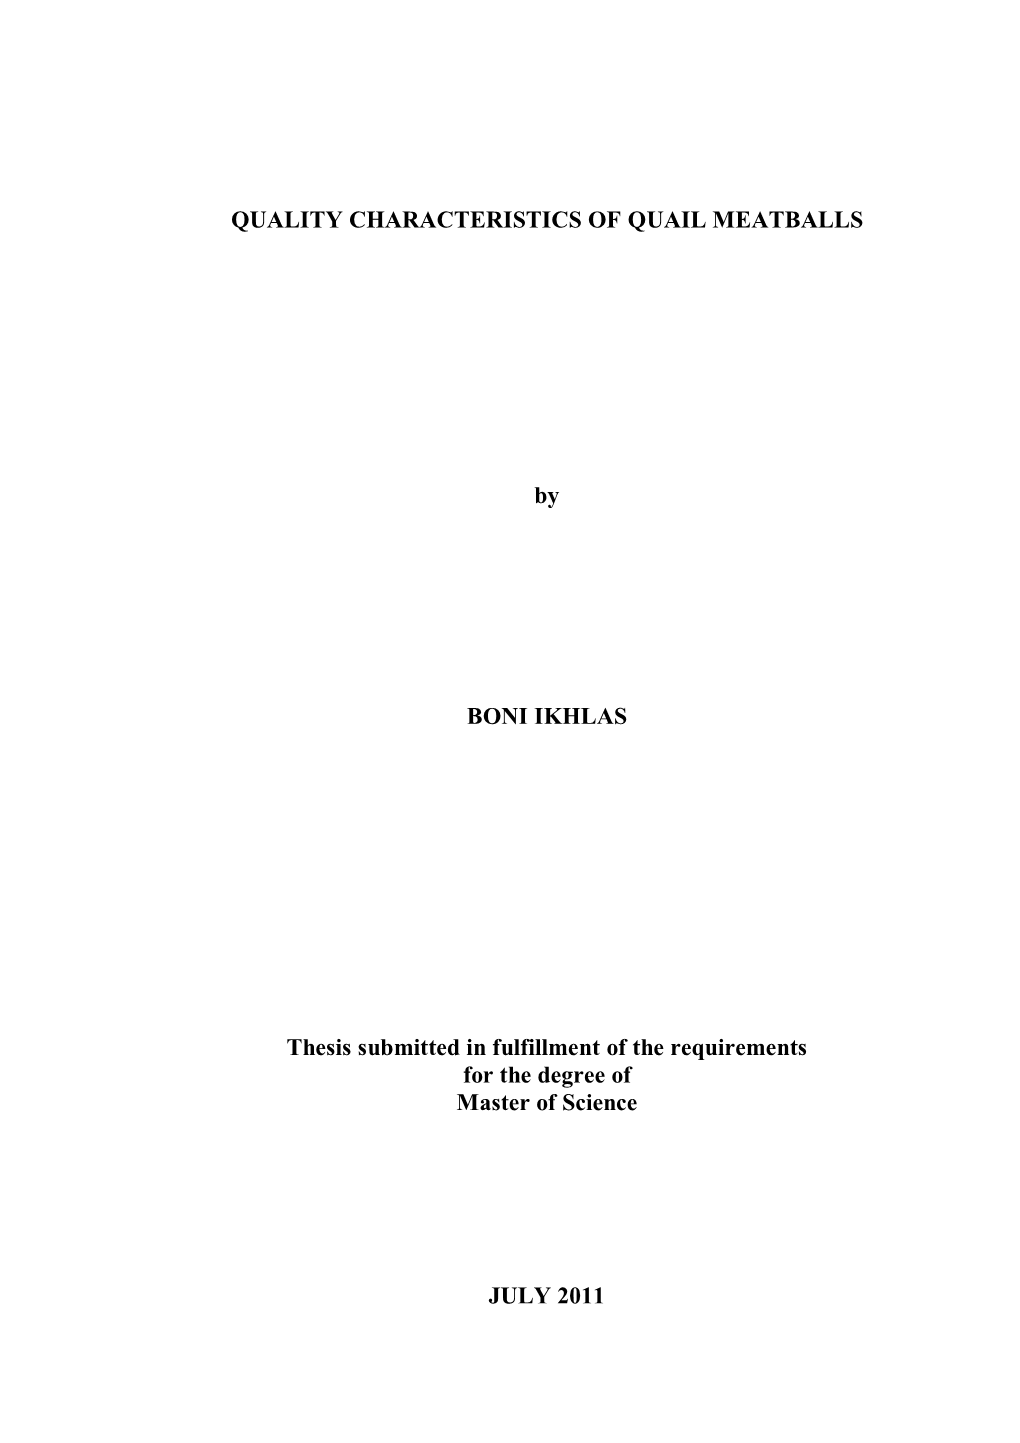 QUALITY CHARACTERISTICS of QUAIL MEATBALLS by BONI